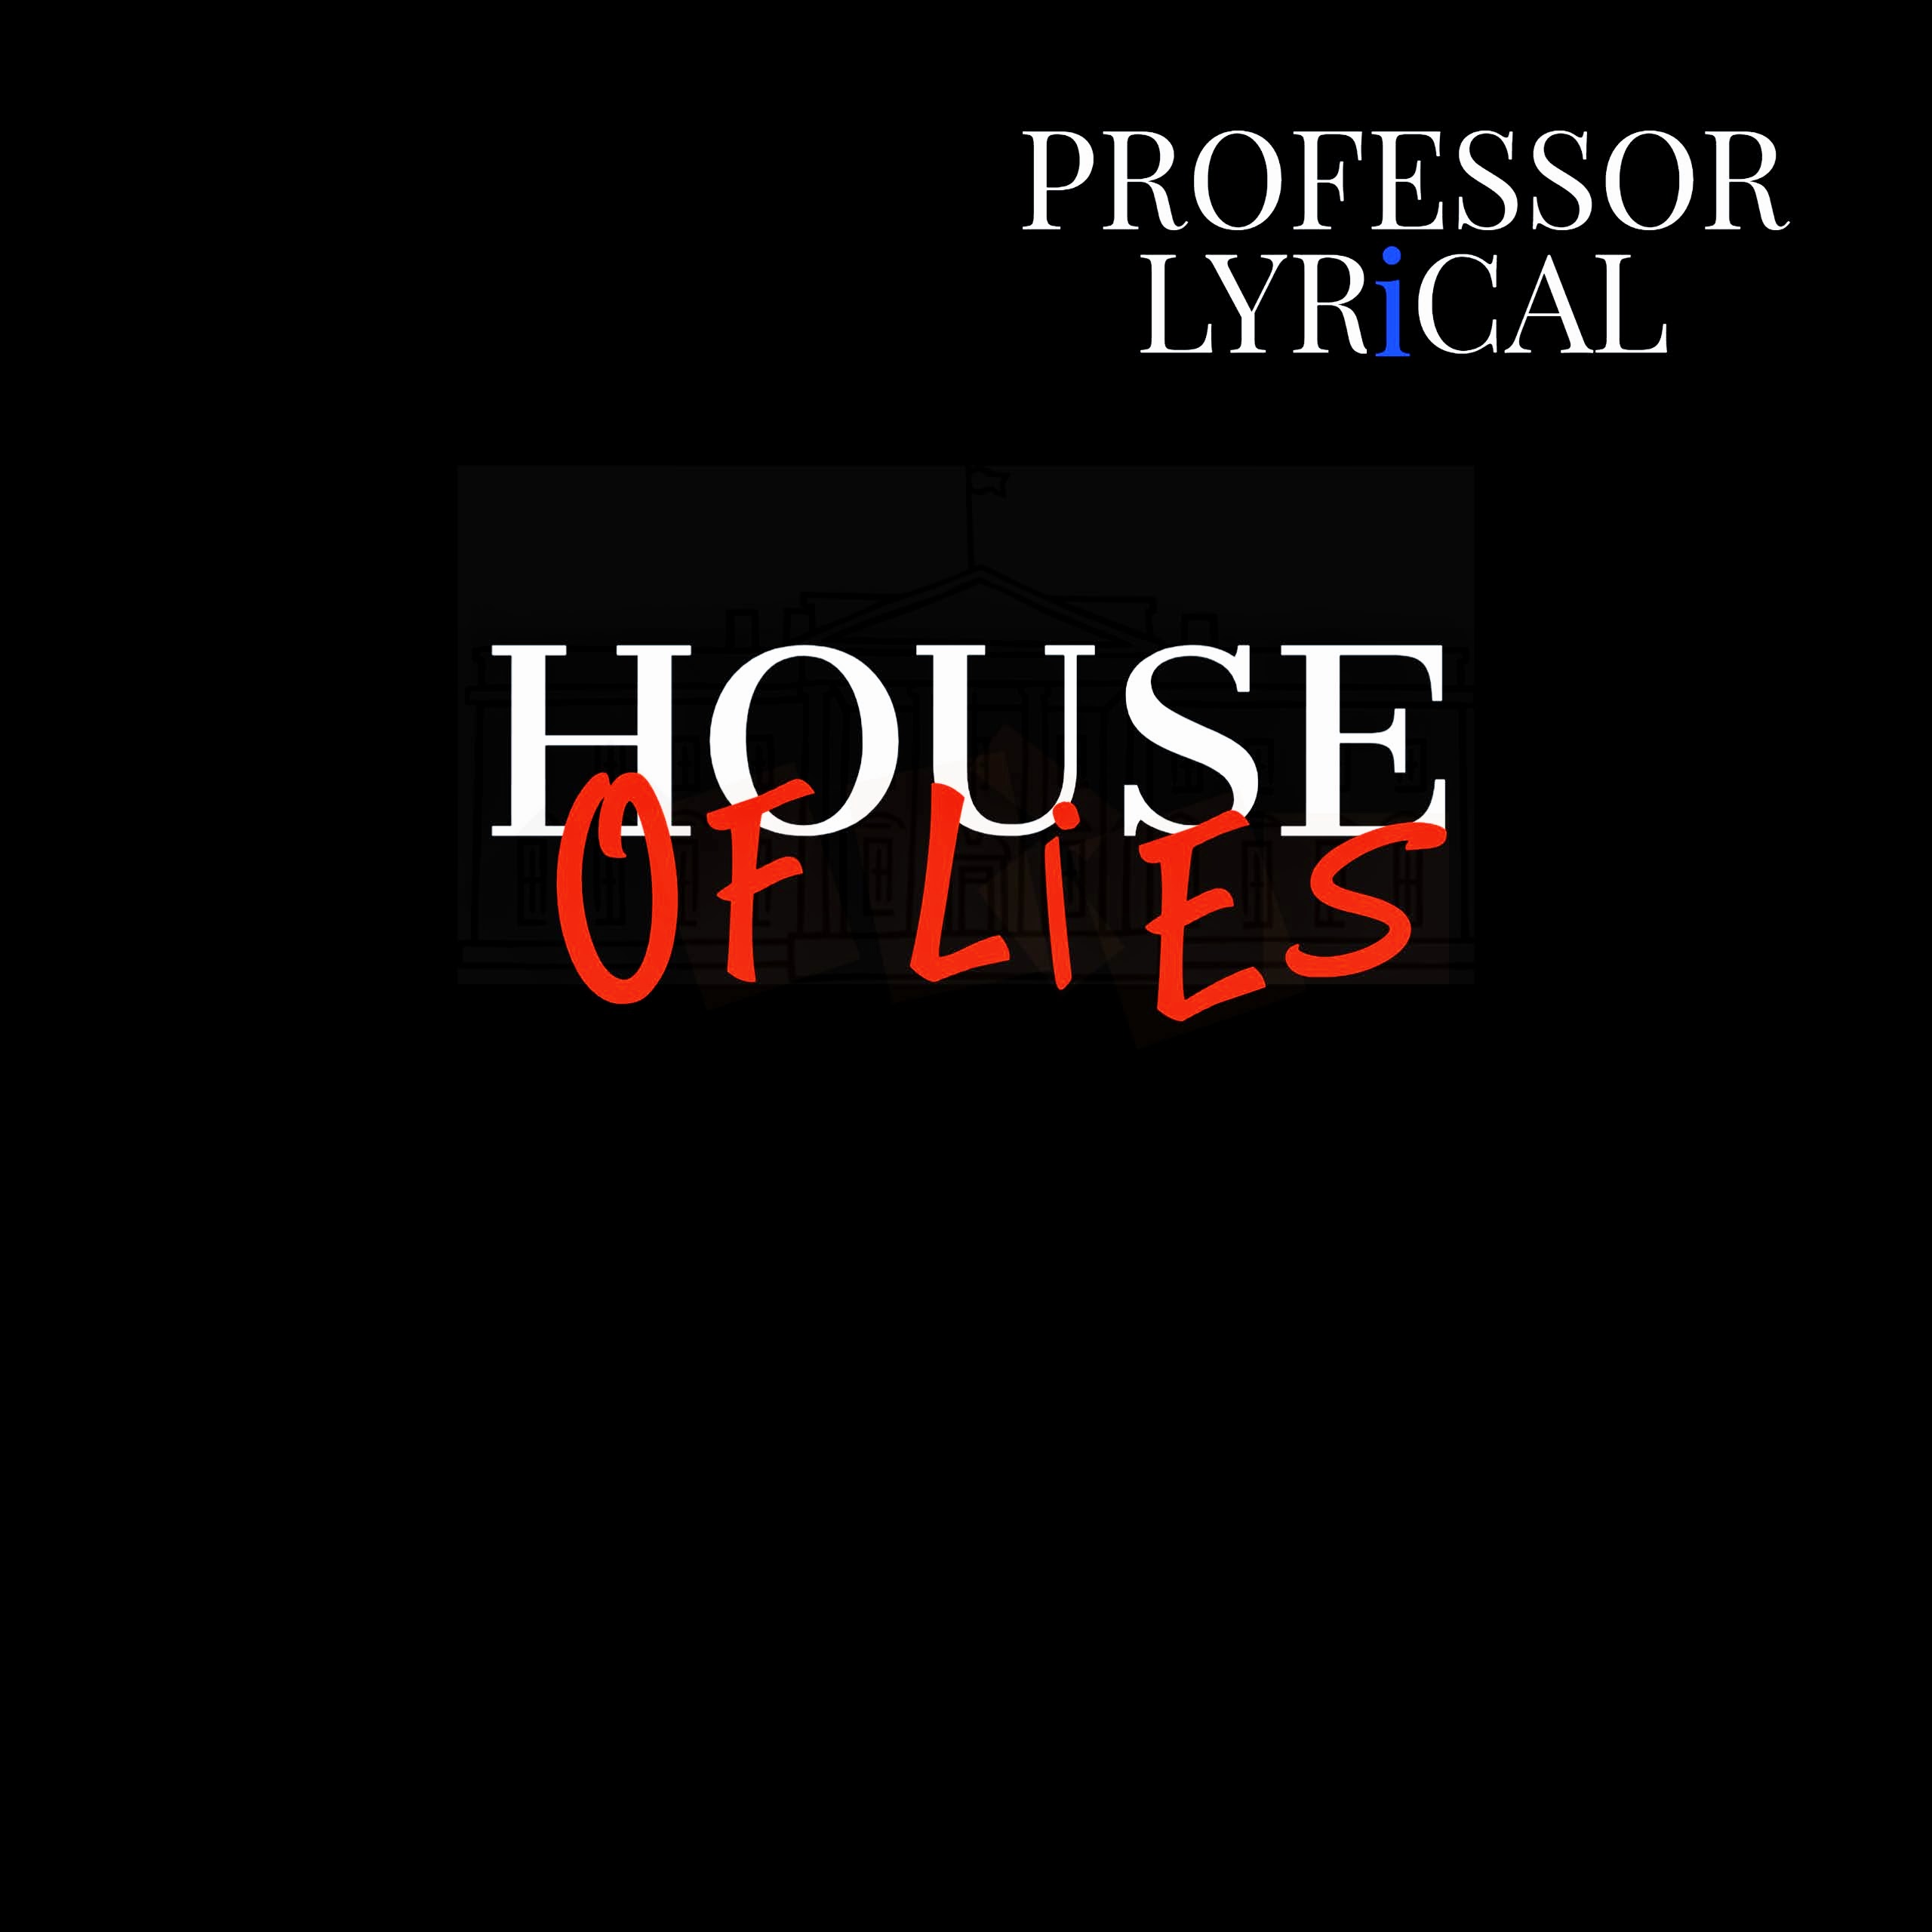 Legendary emcee, Professor Lyrical, releases House of Lies - groundbreaking video with massive twist surprise ending